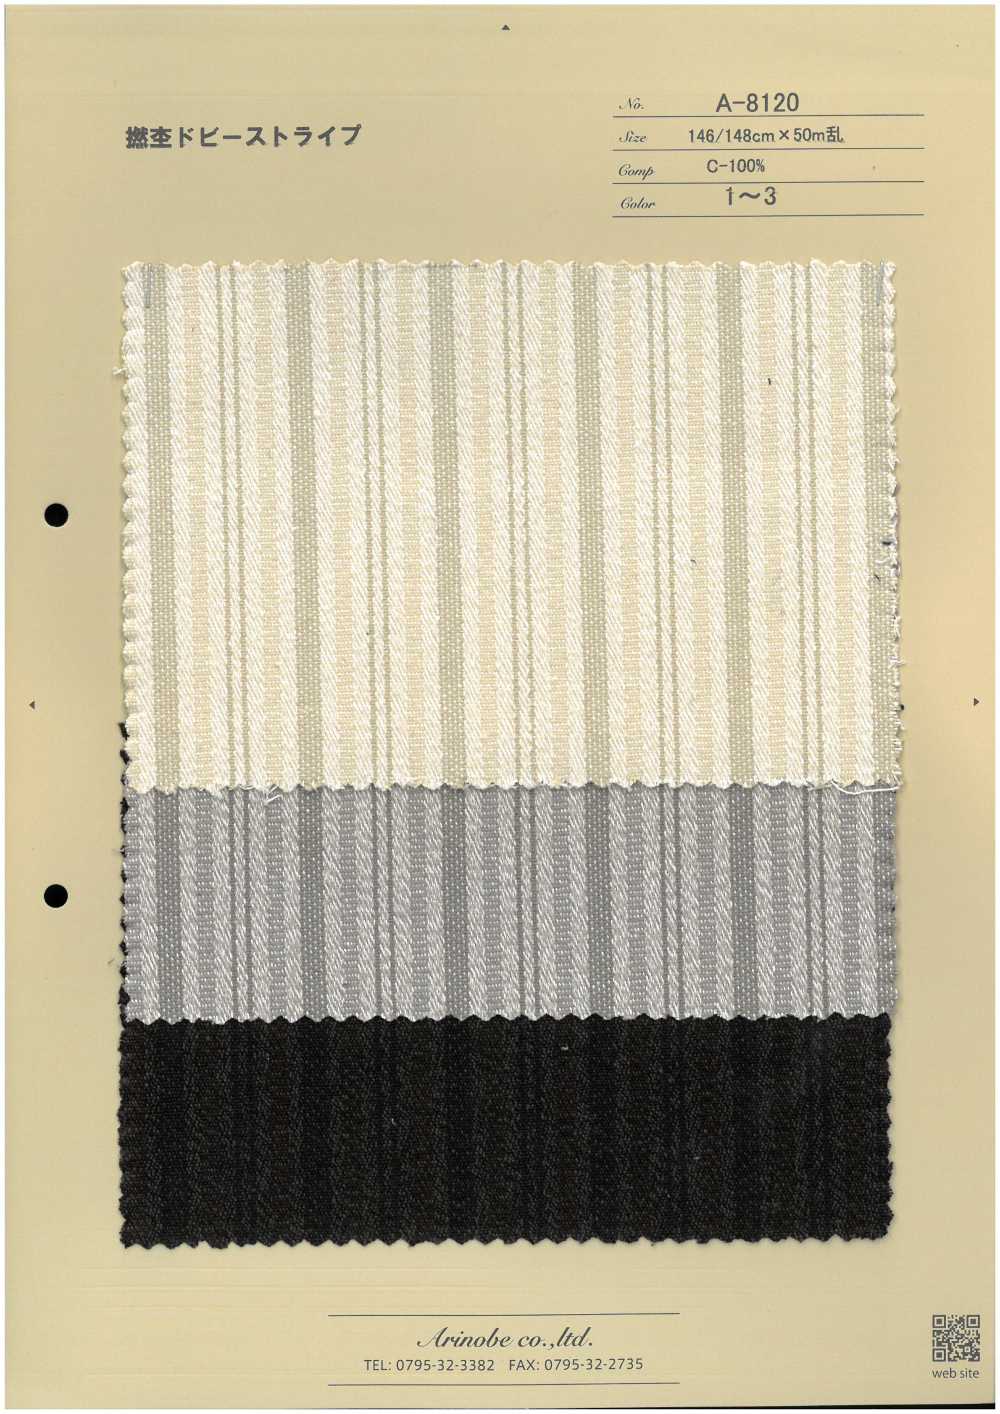 A-8120 Twisted Heather Dobby Stripe[Textile / Fabric] ARINOBE CO., LTD.